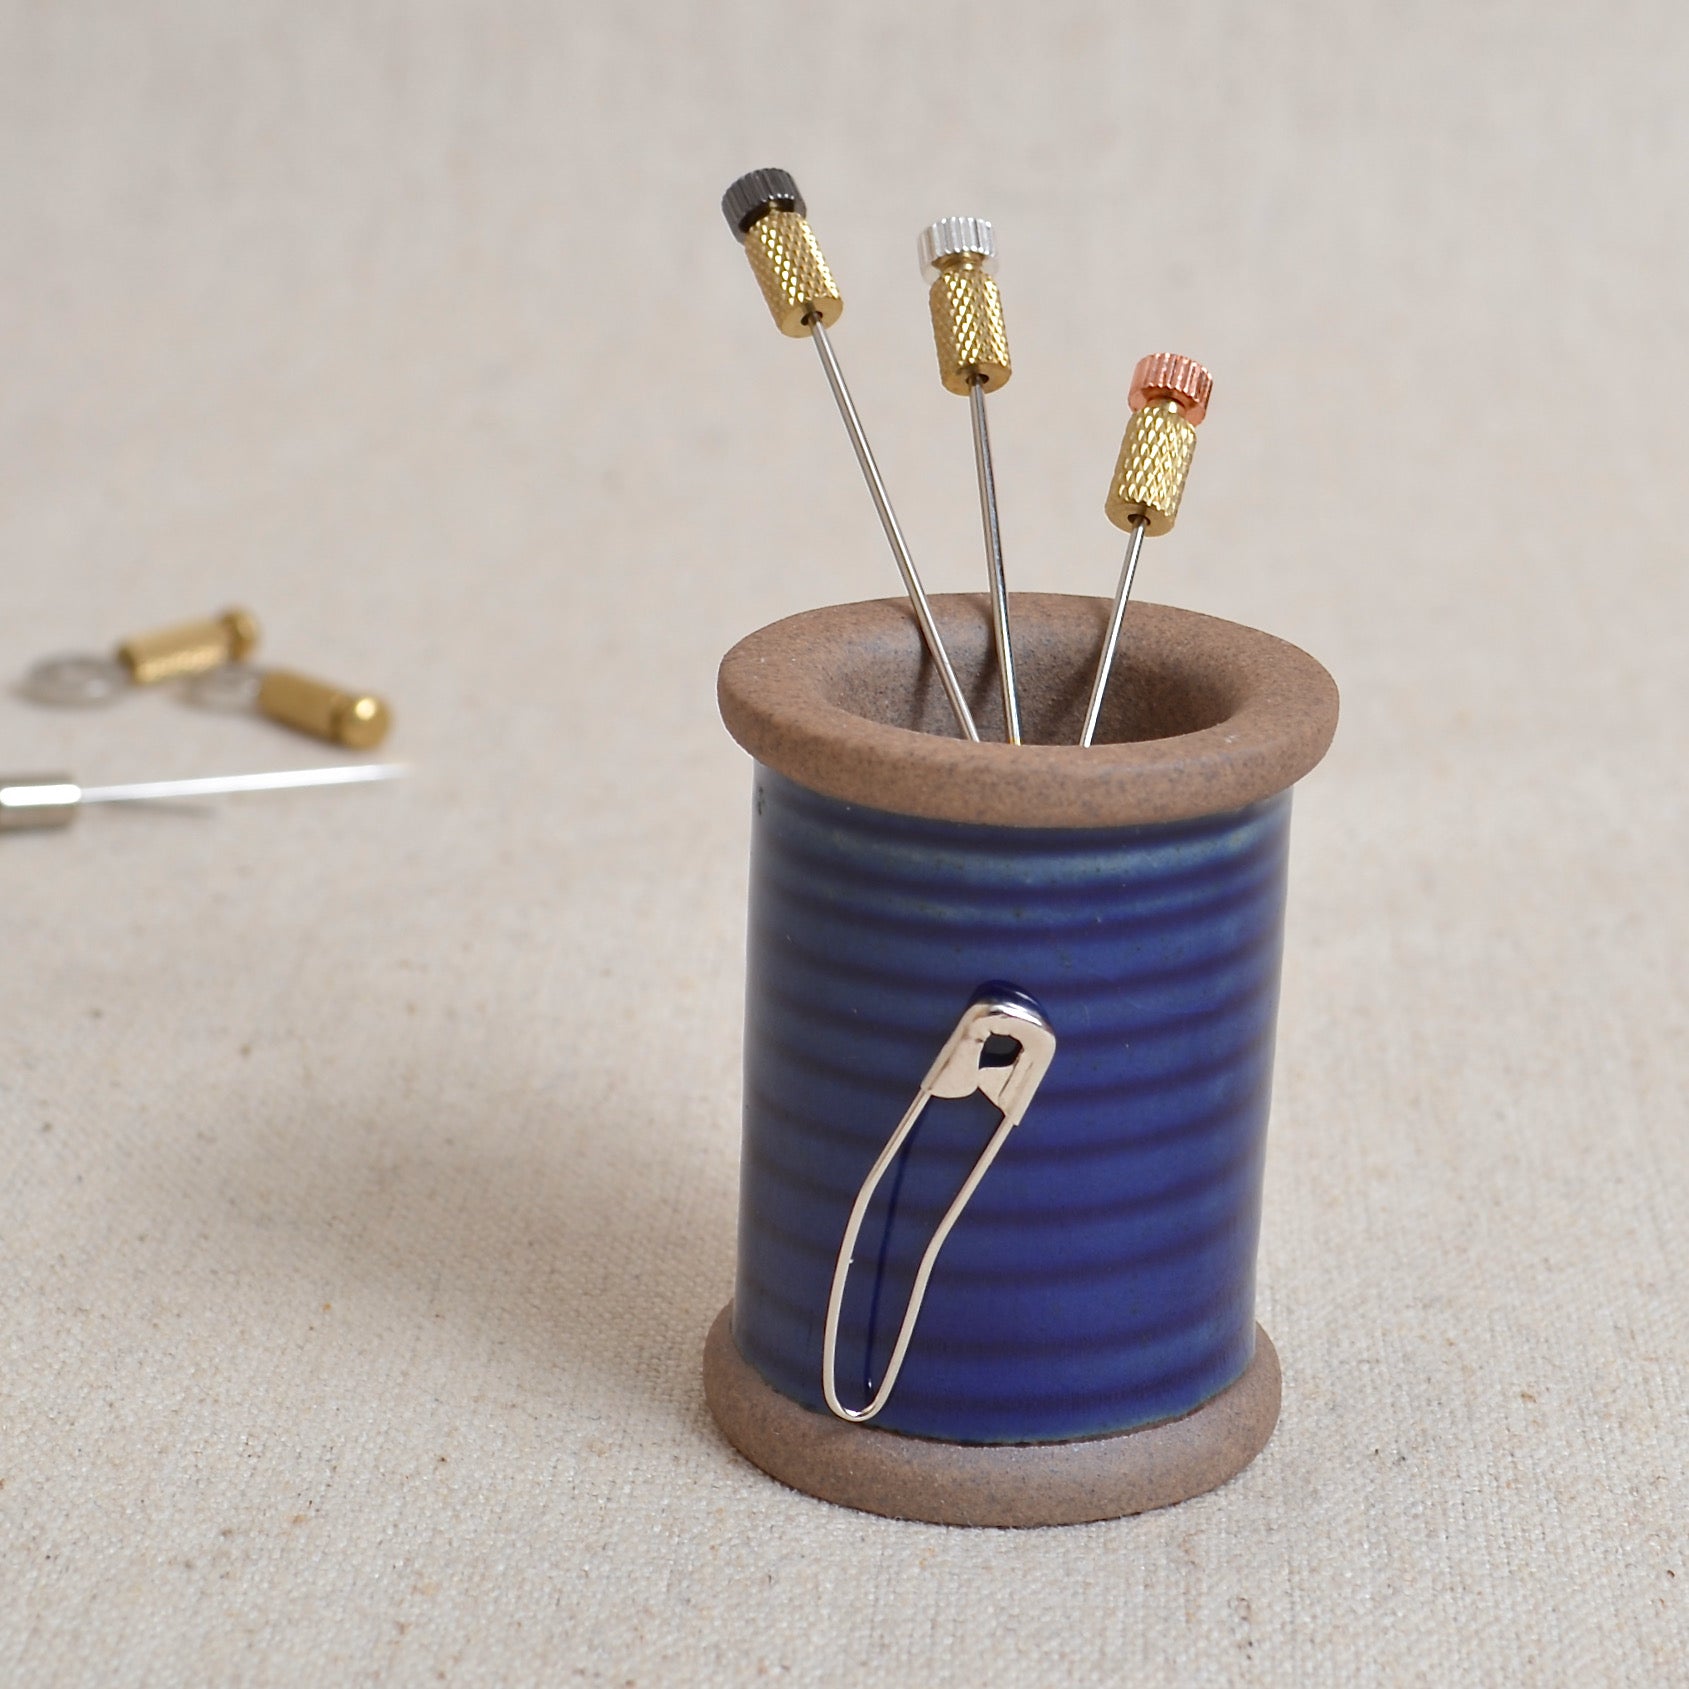 Cohana Ceramic Magnetic Pin Holder